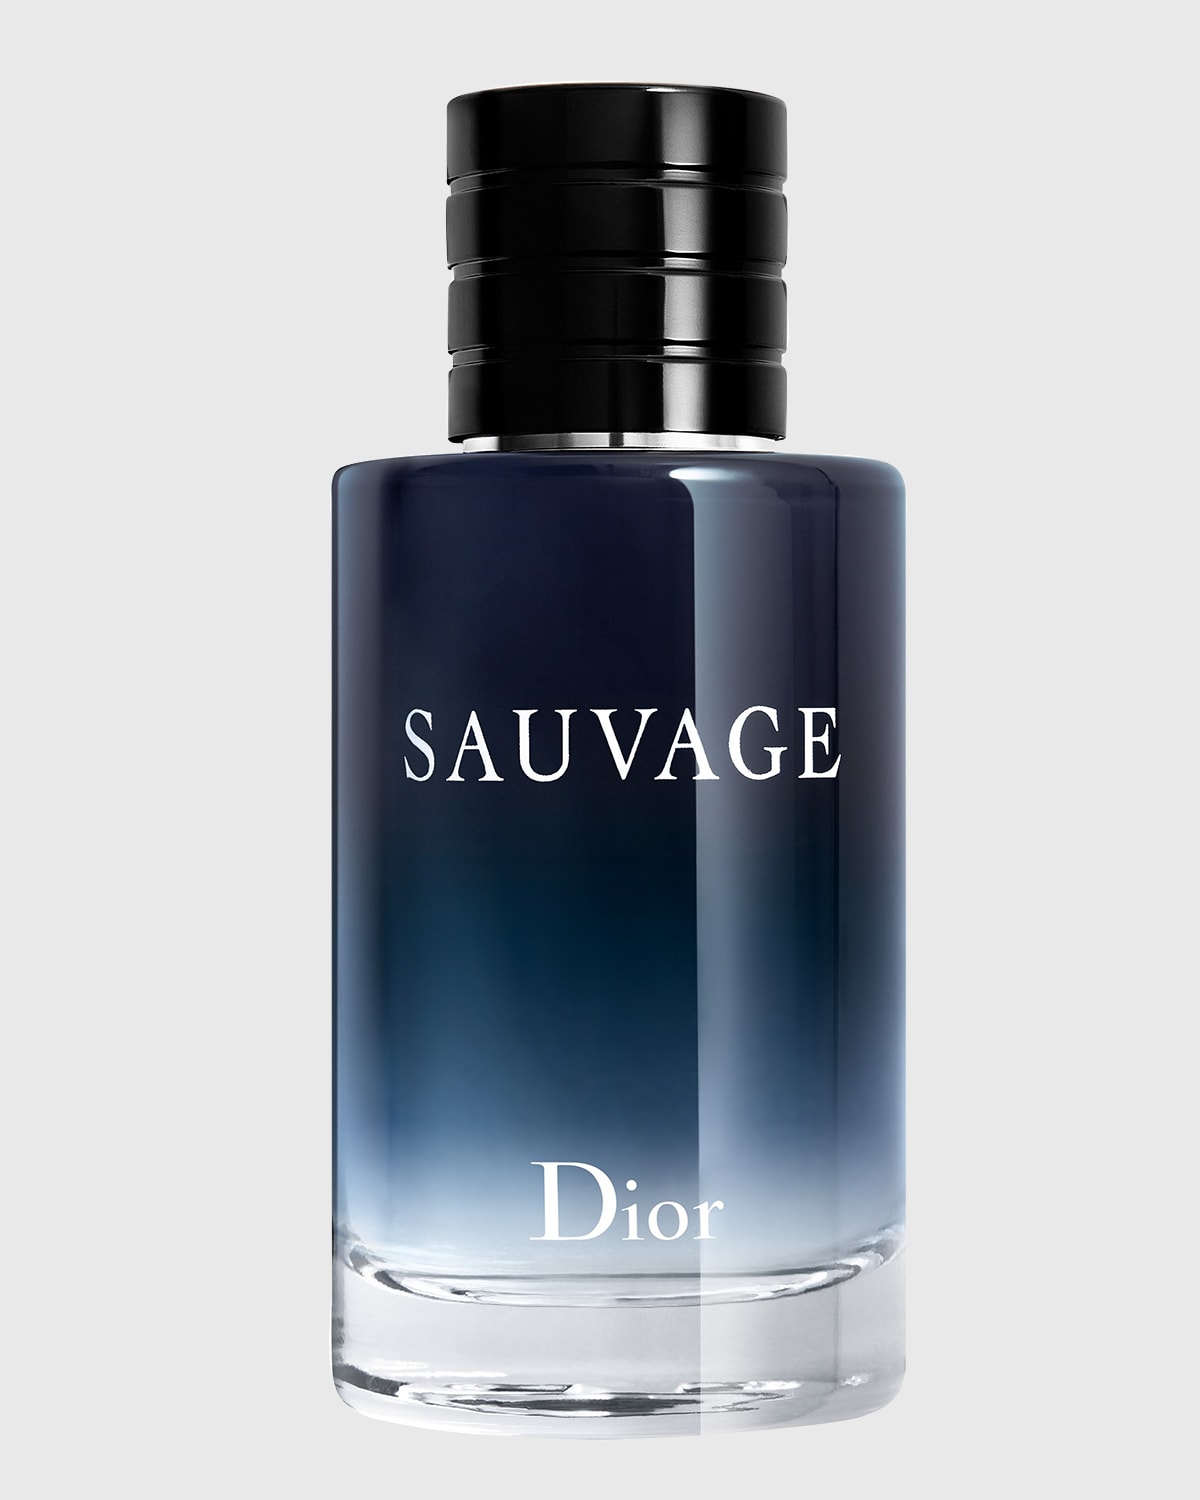 Dior Sauvage Parfum | Neiman Marcus